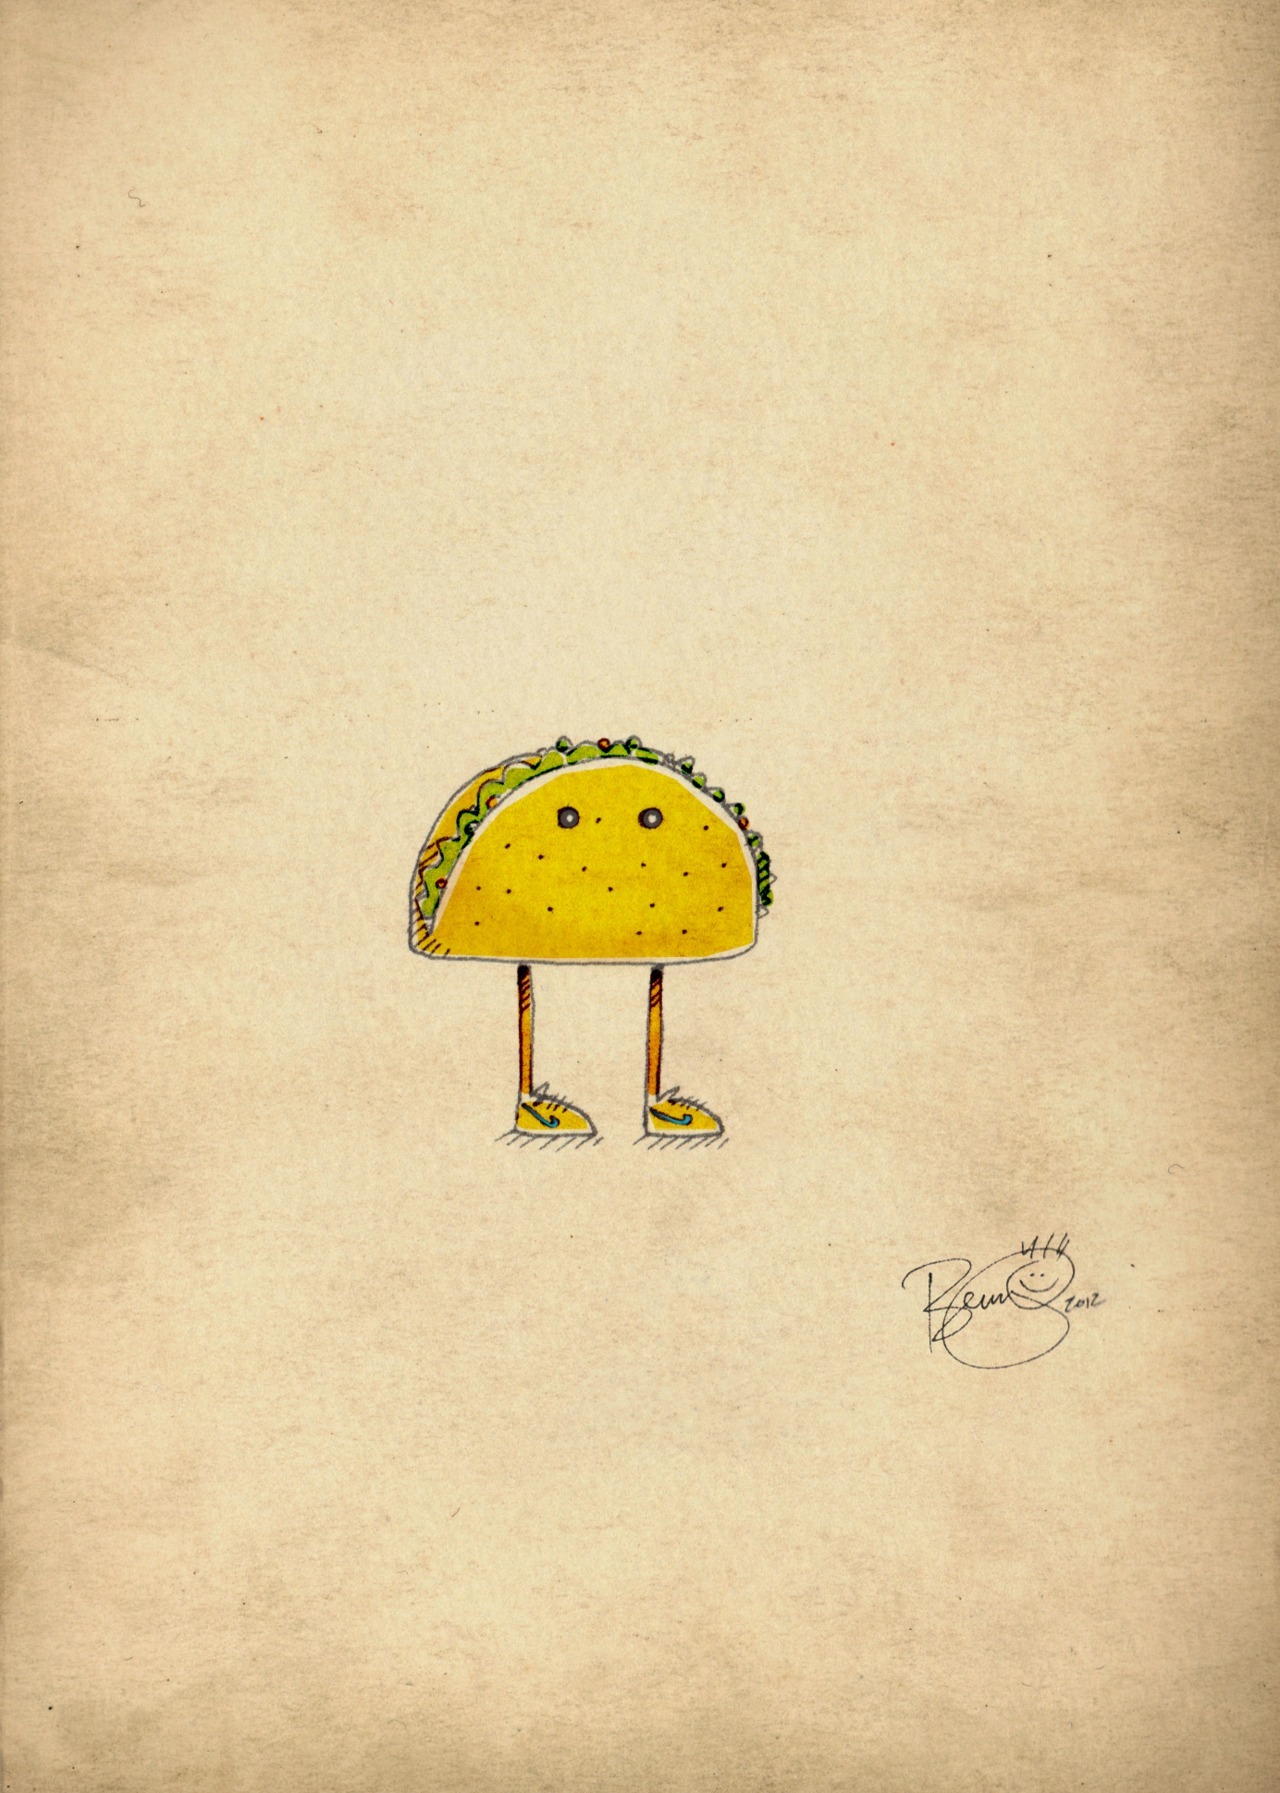 It’s a taco rockin’ a sweet pair of Nike Waffles. Follow my tumblr here!